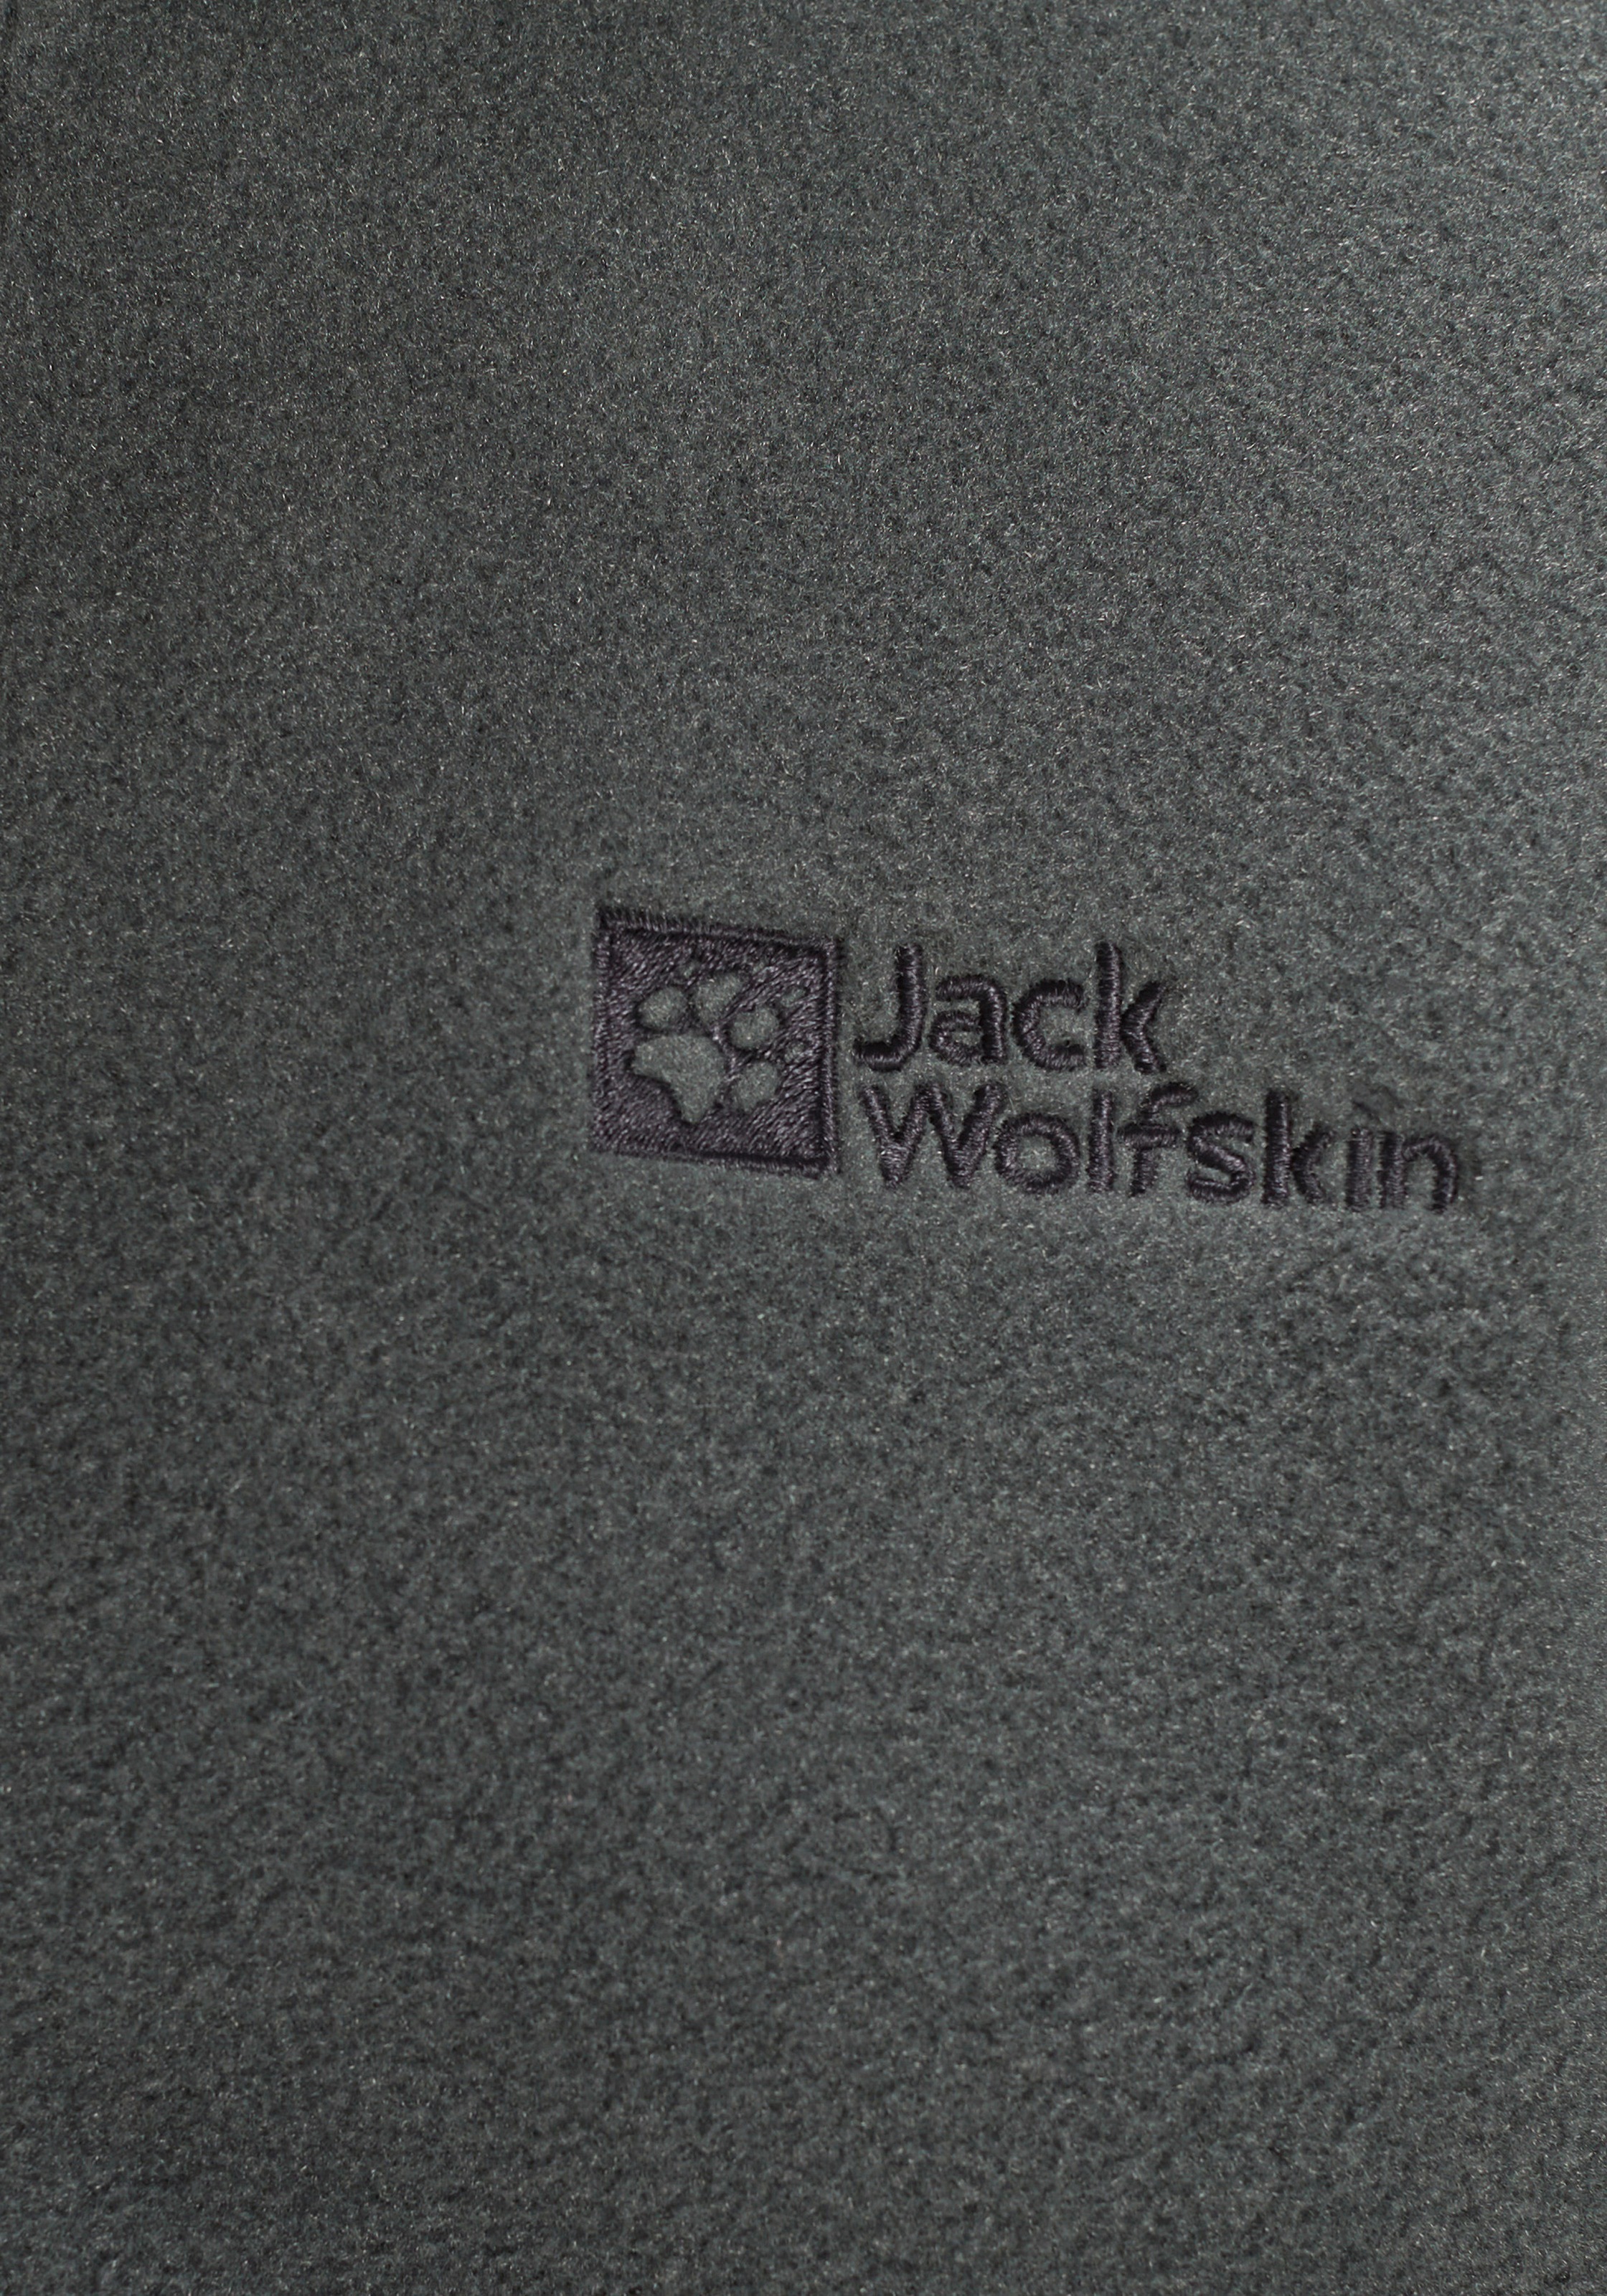 K«, Jack »WINTERSTEIN ✵ | kaufen Wolfskin Fleecejacke aus JACKET Recyclingmaterial Jelmoli-Versand günstig